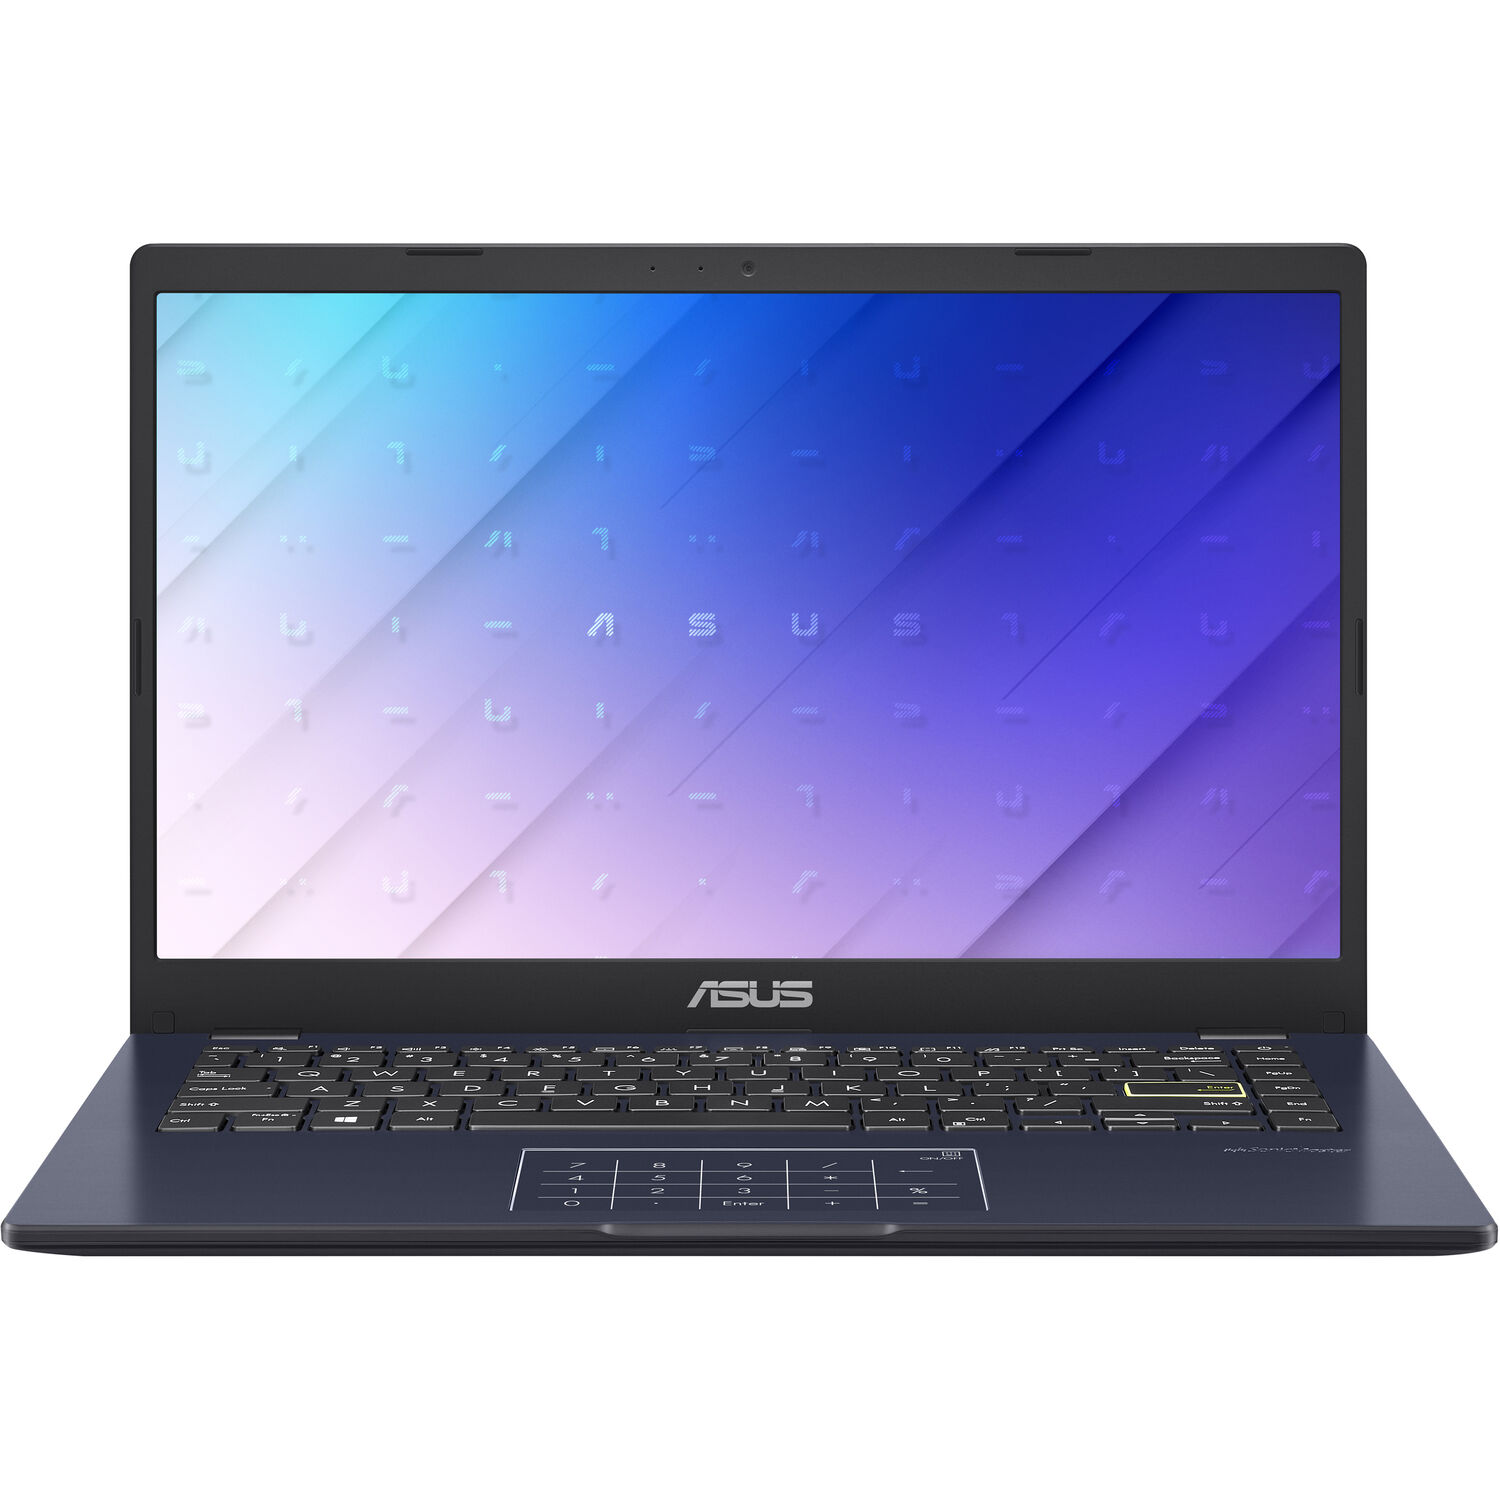 ASUS 14 L410 Everyday Value Laptop (Intel Celeron N4020 2-Core, 4GB RAM, 256GB PCIe SSD, 14.0" Full HD (1920x1080), Intel UHD 600, Wifi, Bluetooth, Webcam, 1xUSB 3.2, 1xHDMI, Win 10 Home) - image 1 of 6